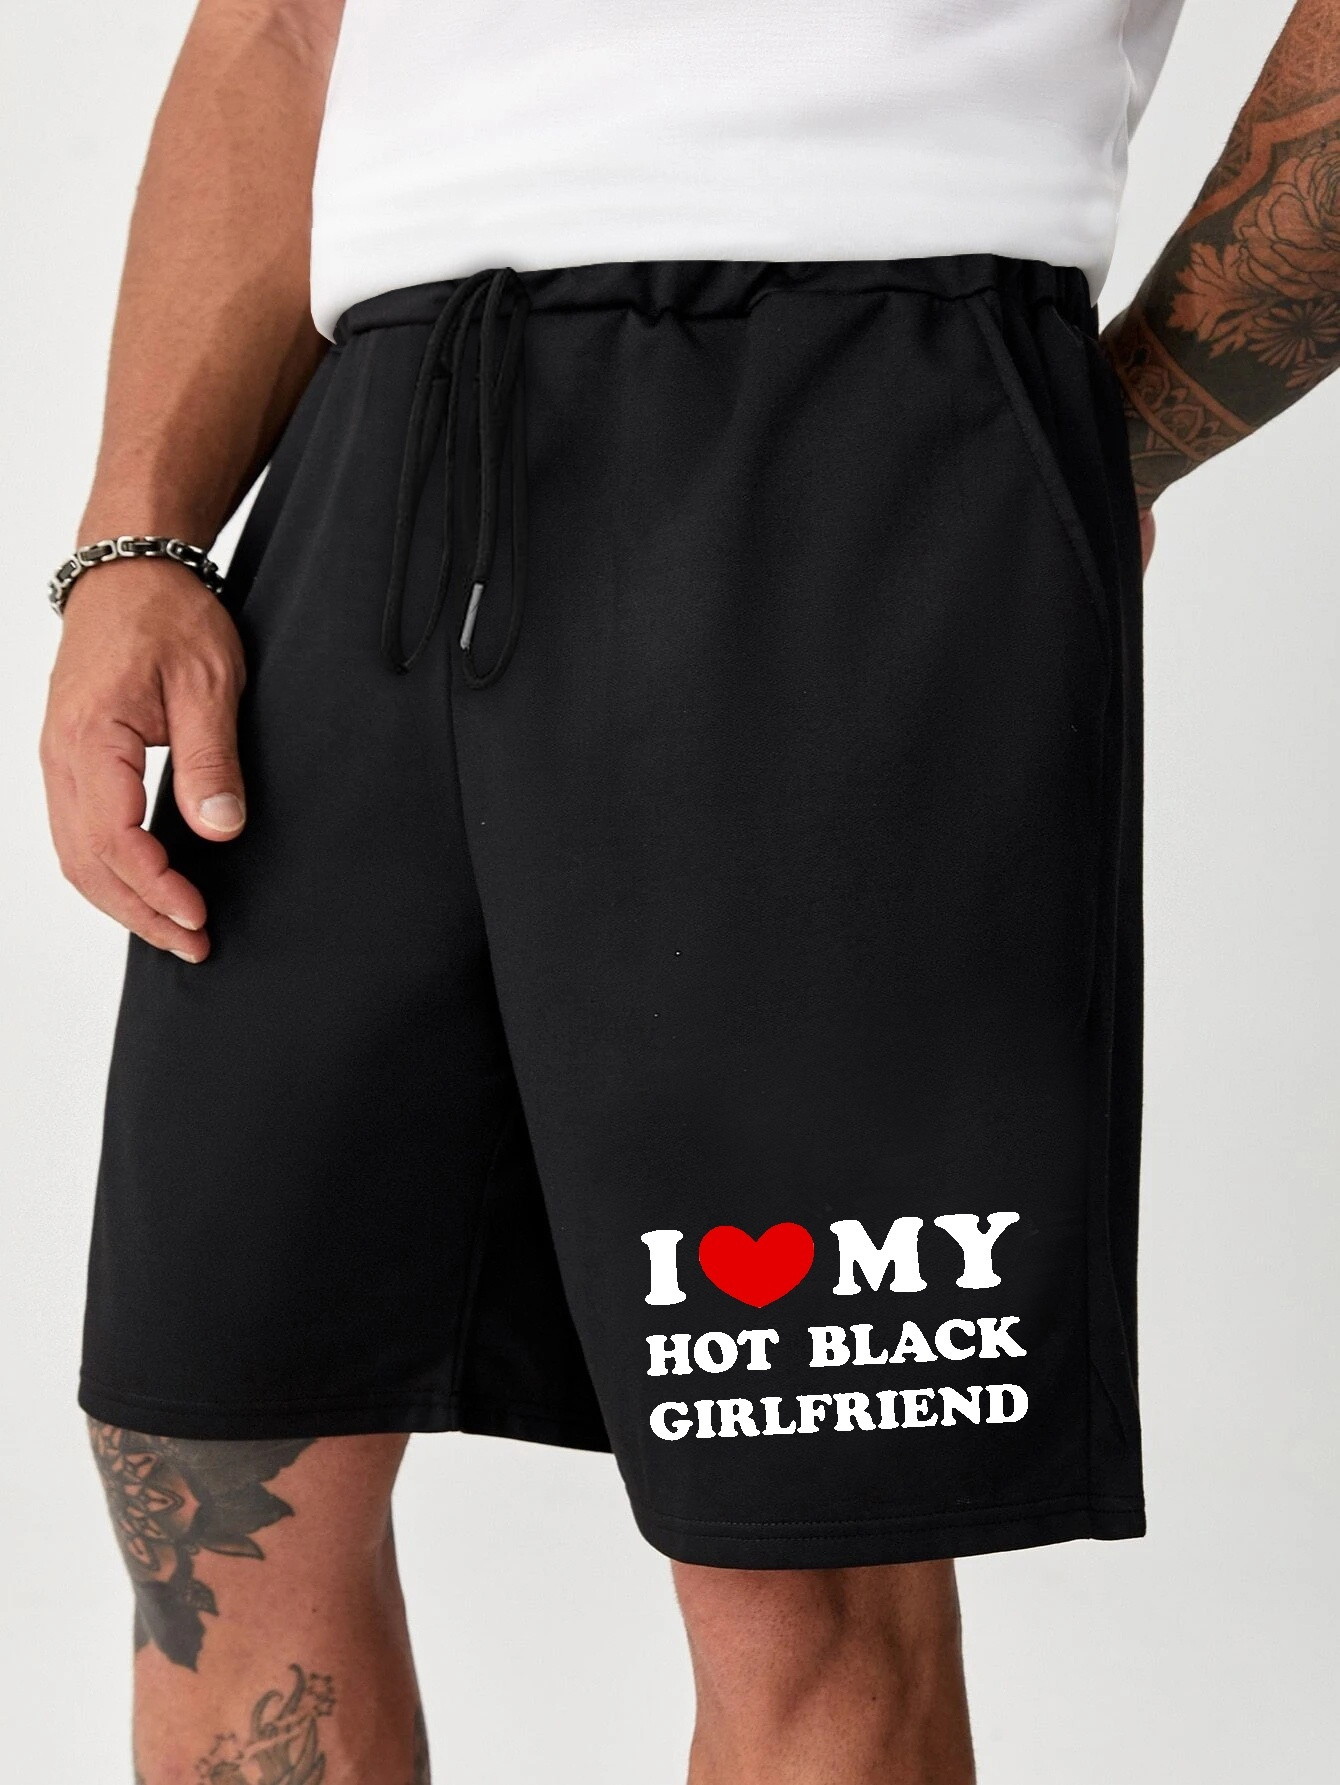  I Love My Girlfriend Board Shorts Men's Quick Dry